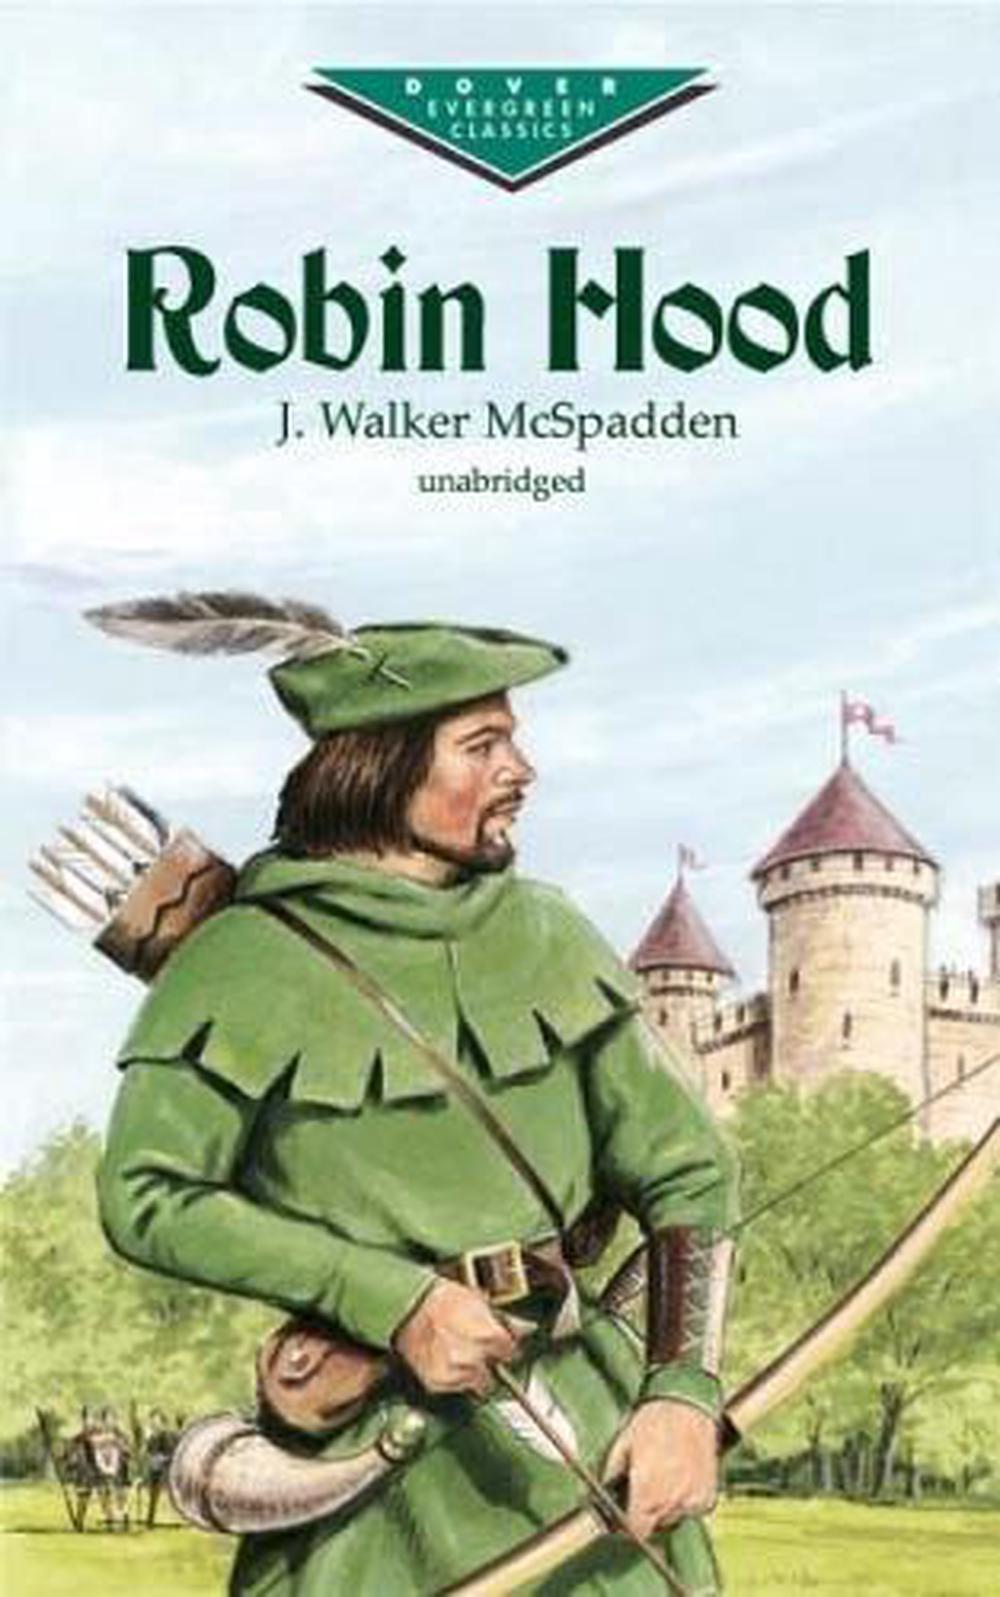 Robin Hood by J.C. Holt